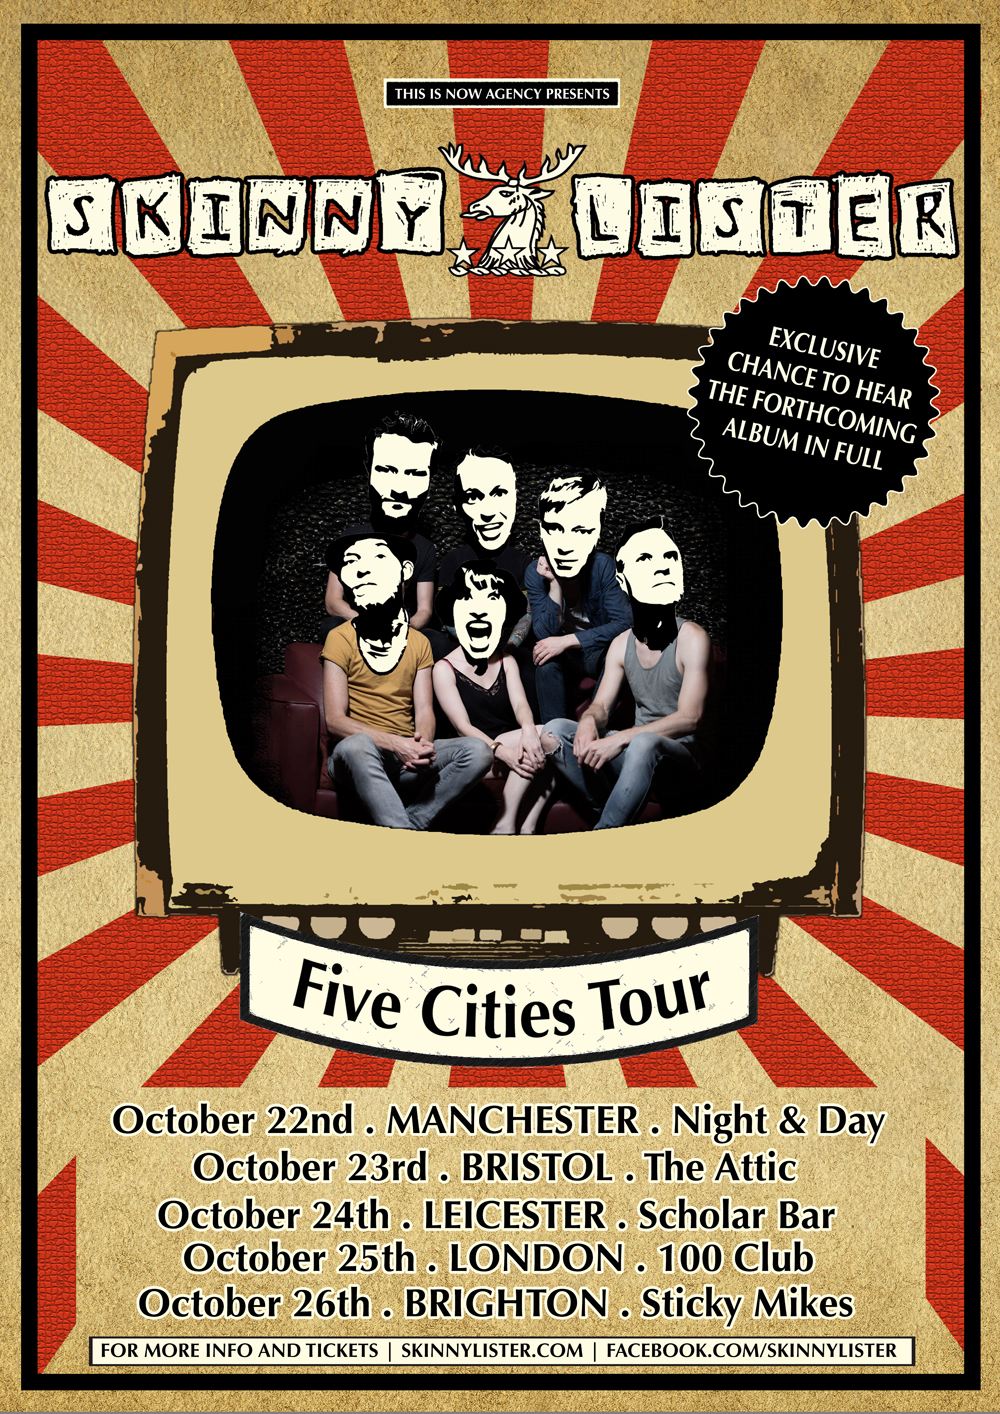 Skinny Lister tour poster